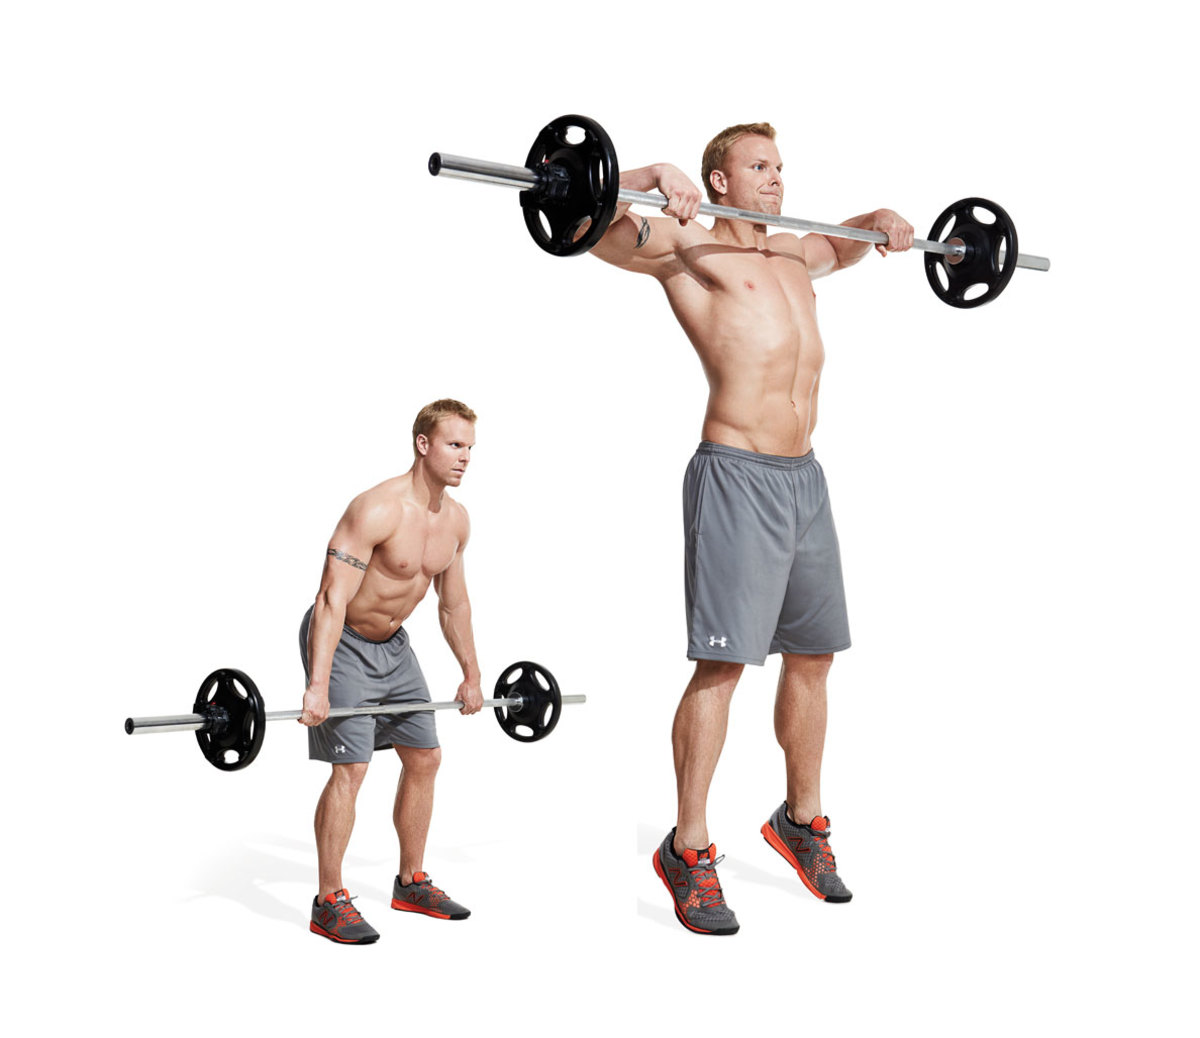 50 Best Shoulder Exercises To Target Full Range of Motion - Men's